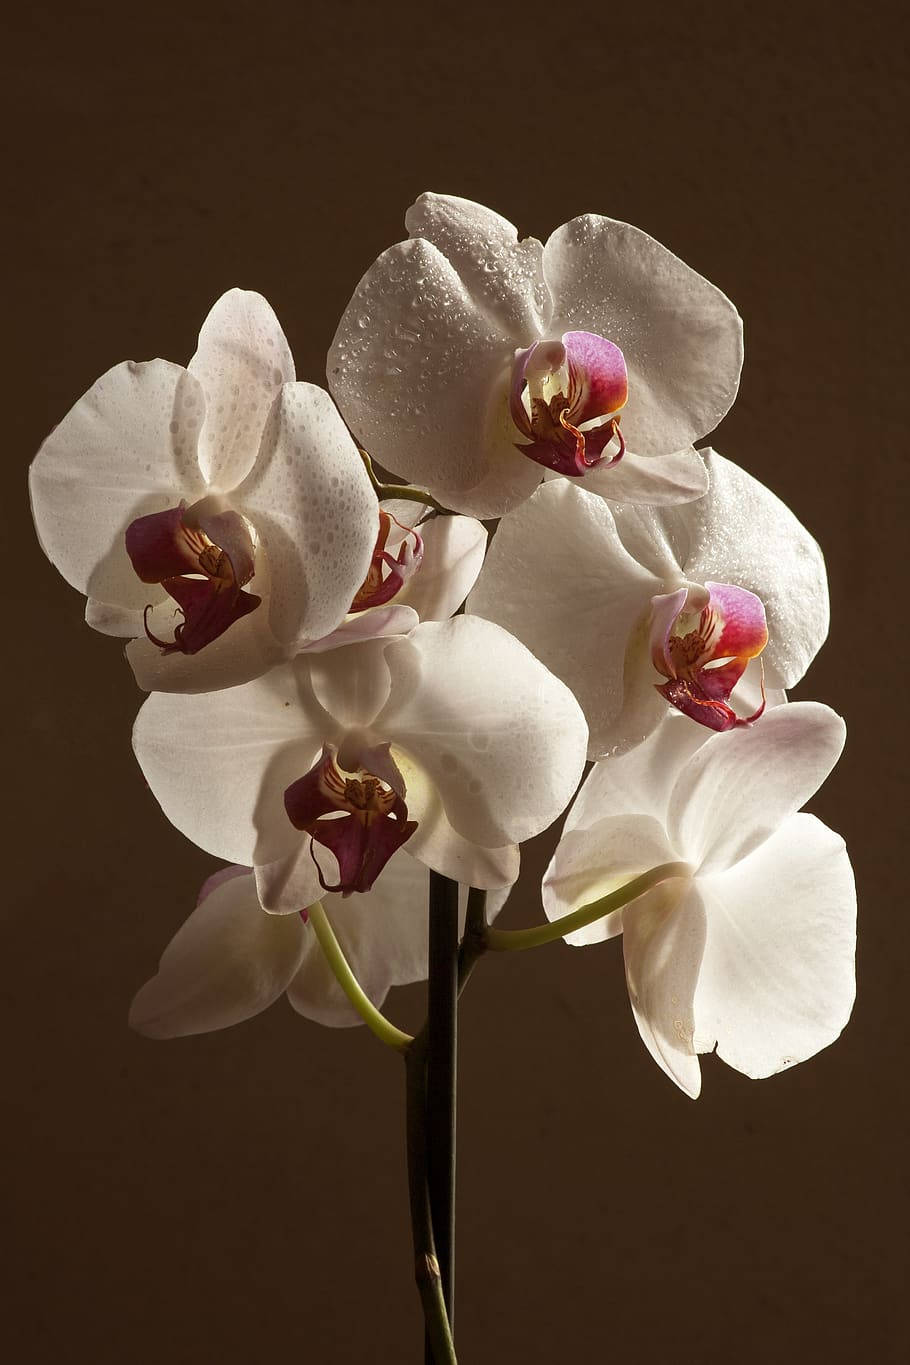 Contrastetonal De Las Flores De Orquídea. Fondo de pantalla